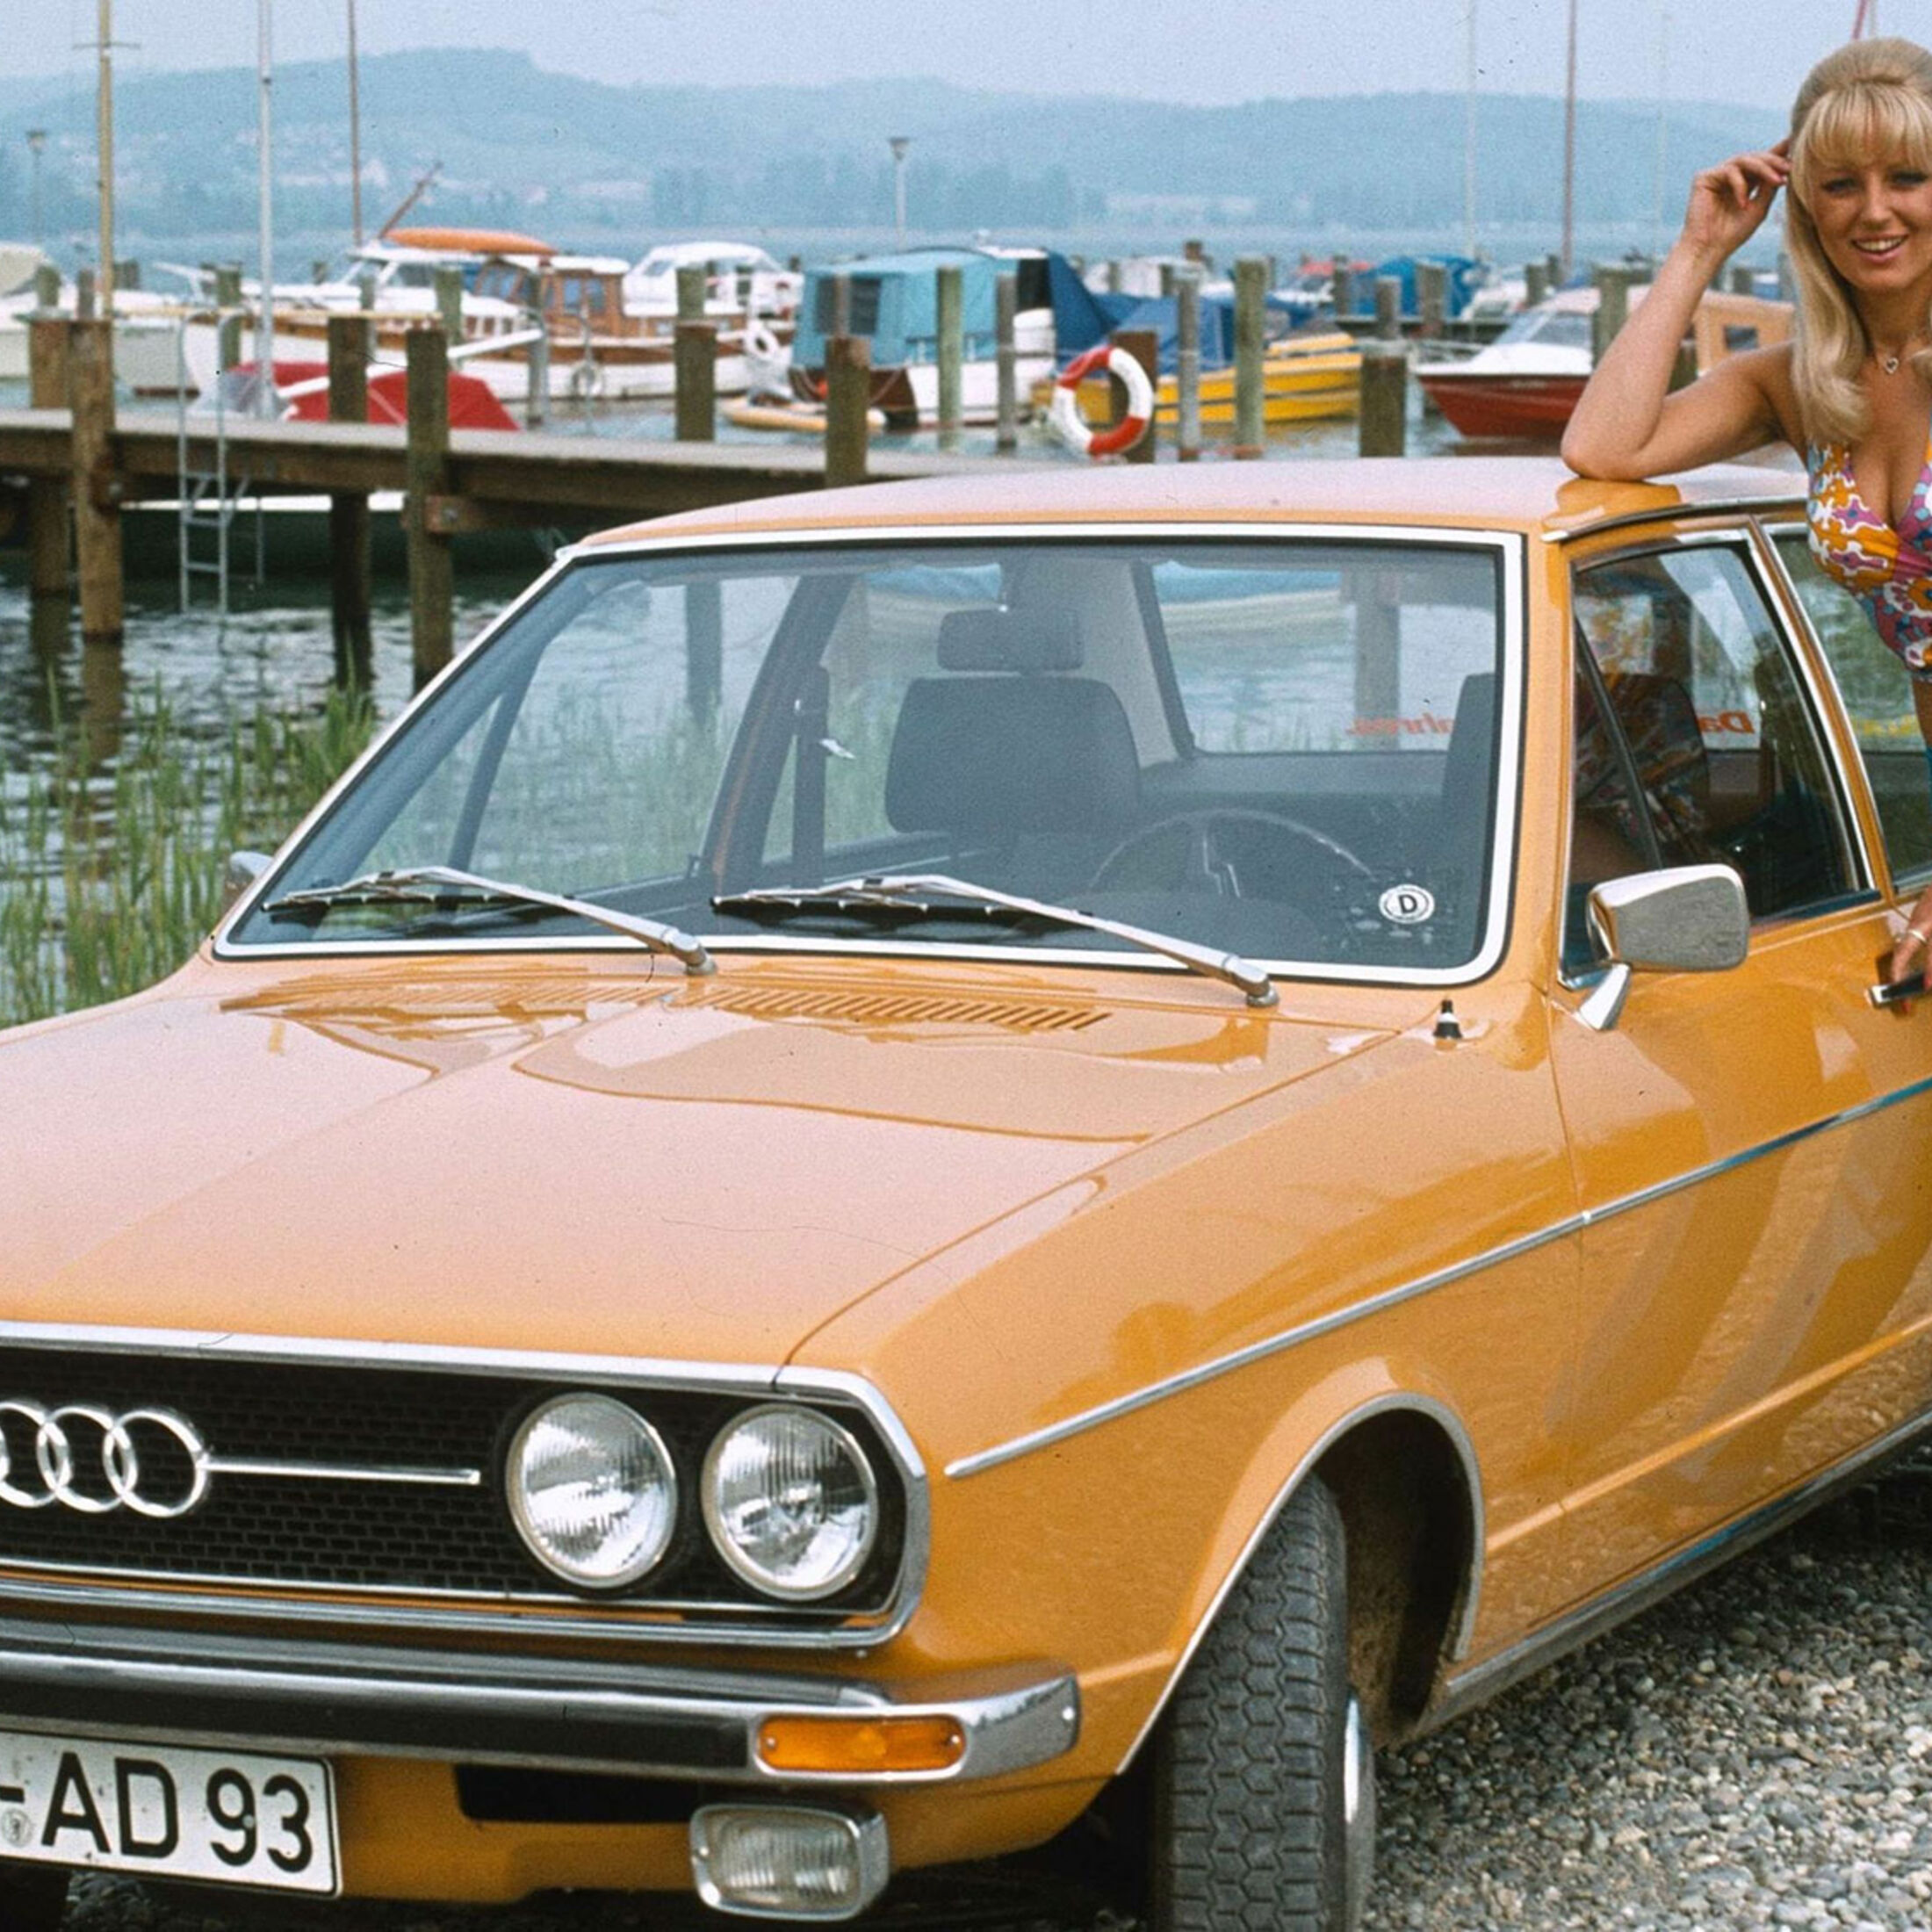 https://imgr1.auto-motor-und-sport.de/Audi-80-B1-1972-1978--jsonLd1x1-c9c55c16-1912708.jpg